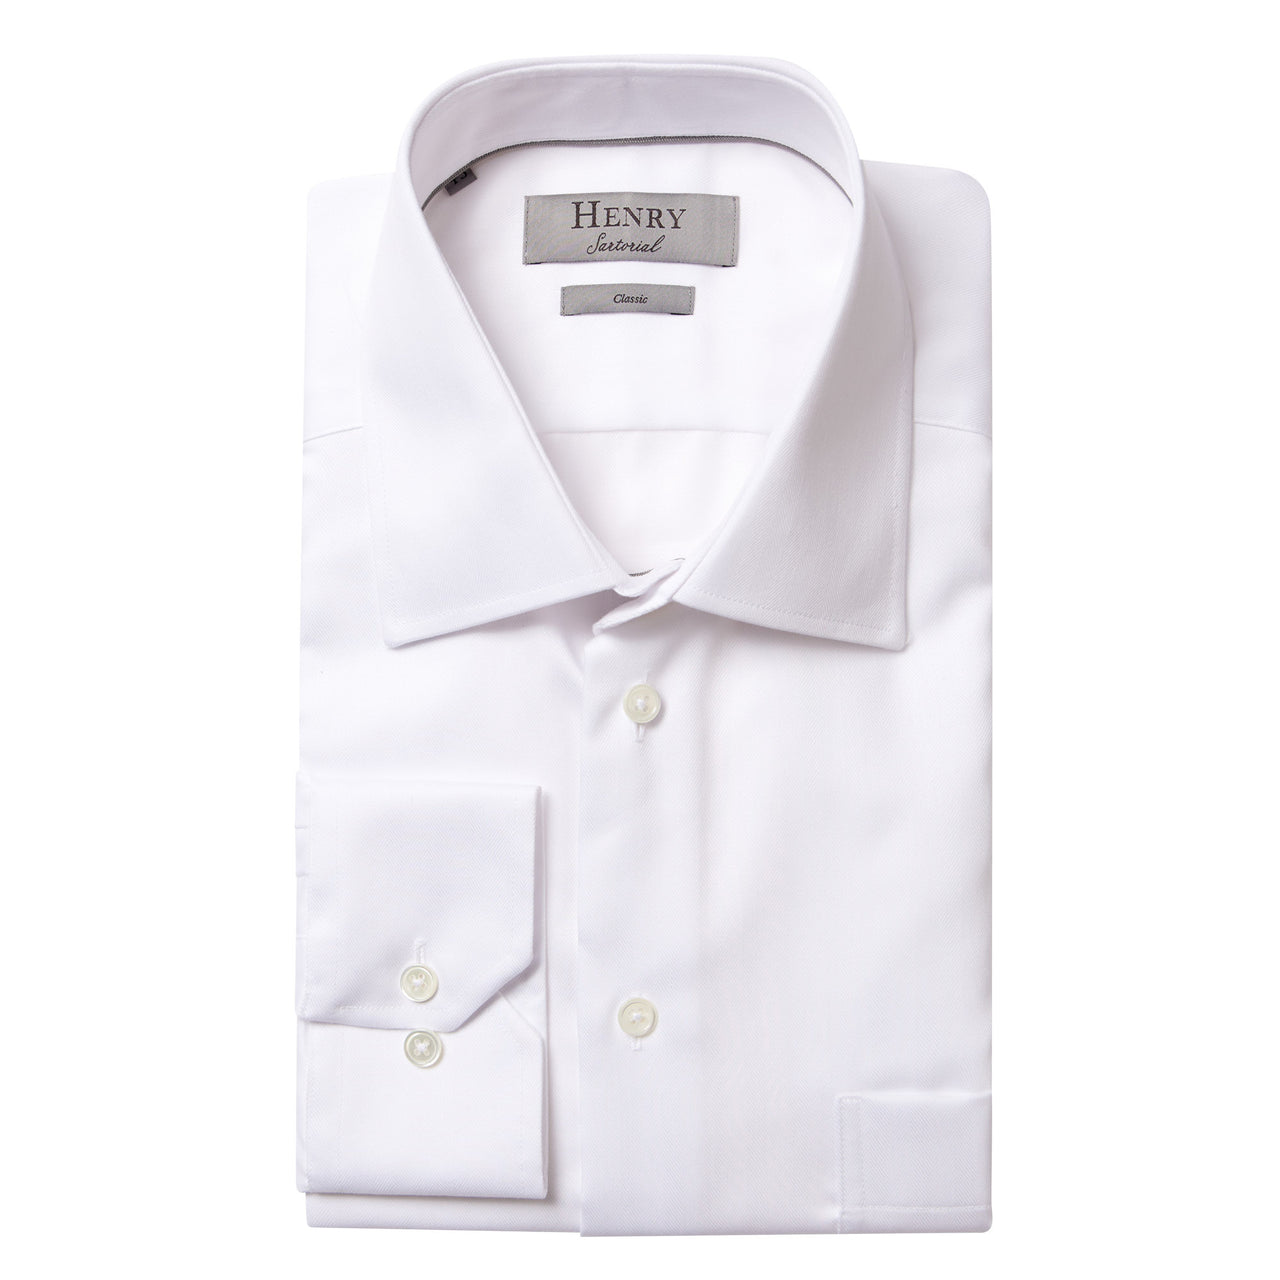 HENRY SARTORIAL Herringbone Business Shirt Single Cuff Classic Fit WHITE